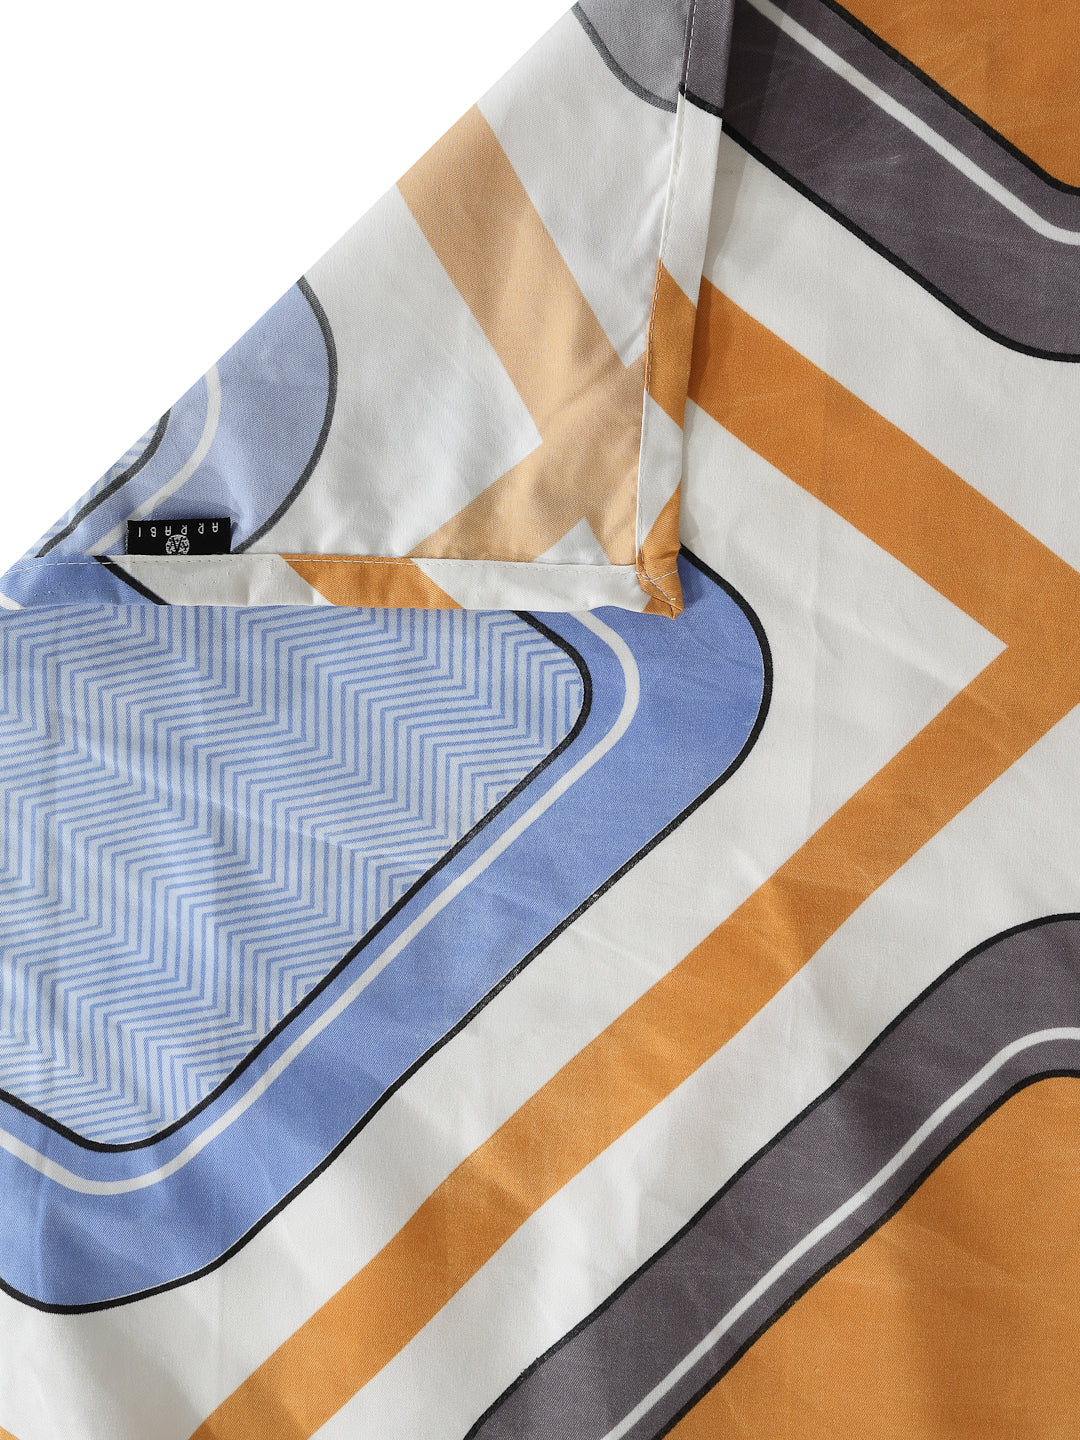 Arrabi Multi Geometric TC Cotton Blend Super King Size Bedsheet with 2 Pillow Covers (270 x 260 cm)